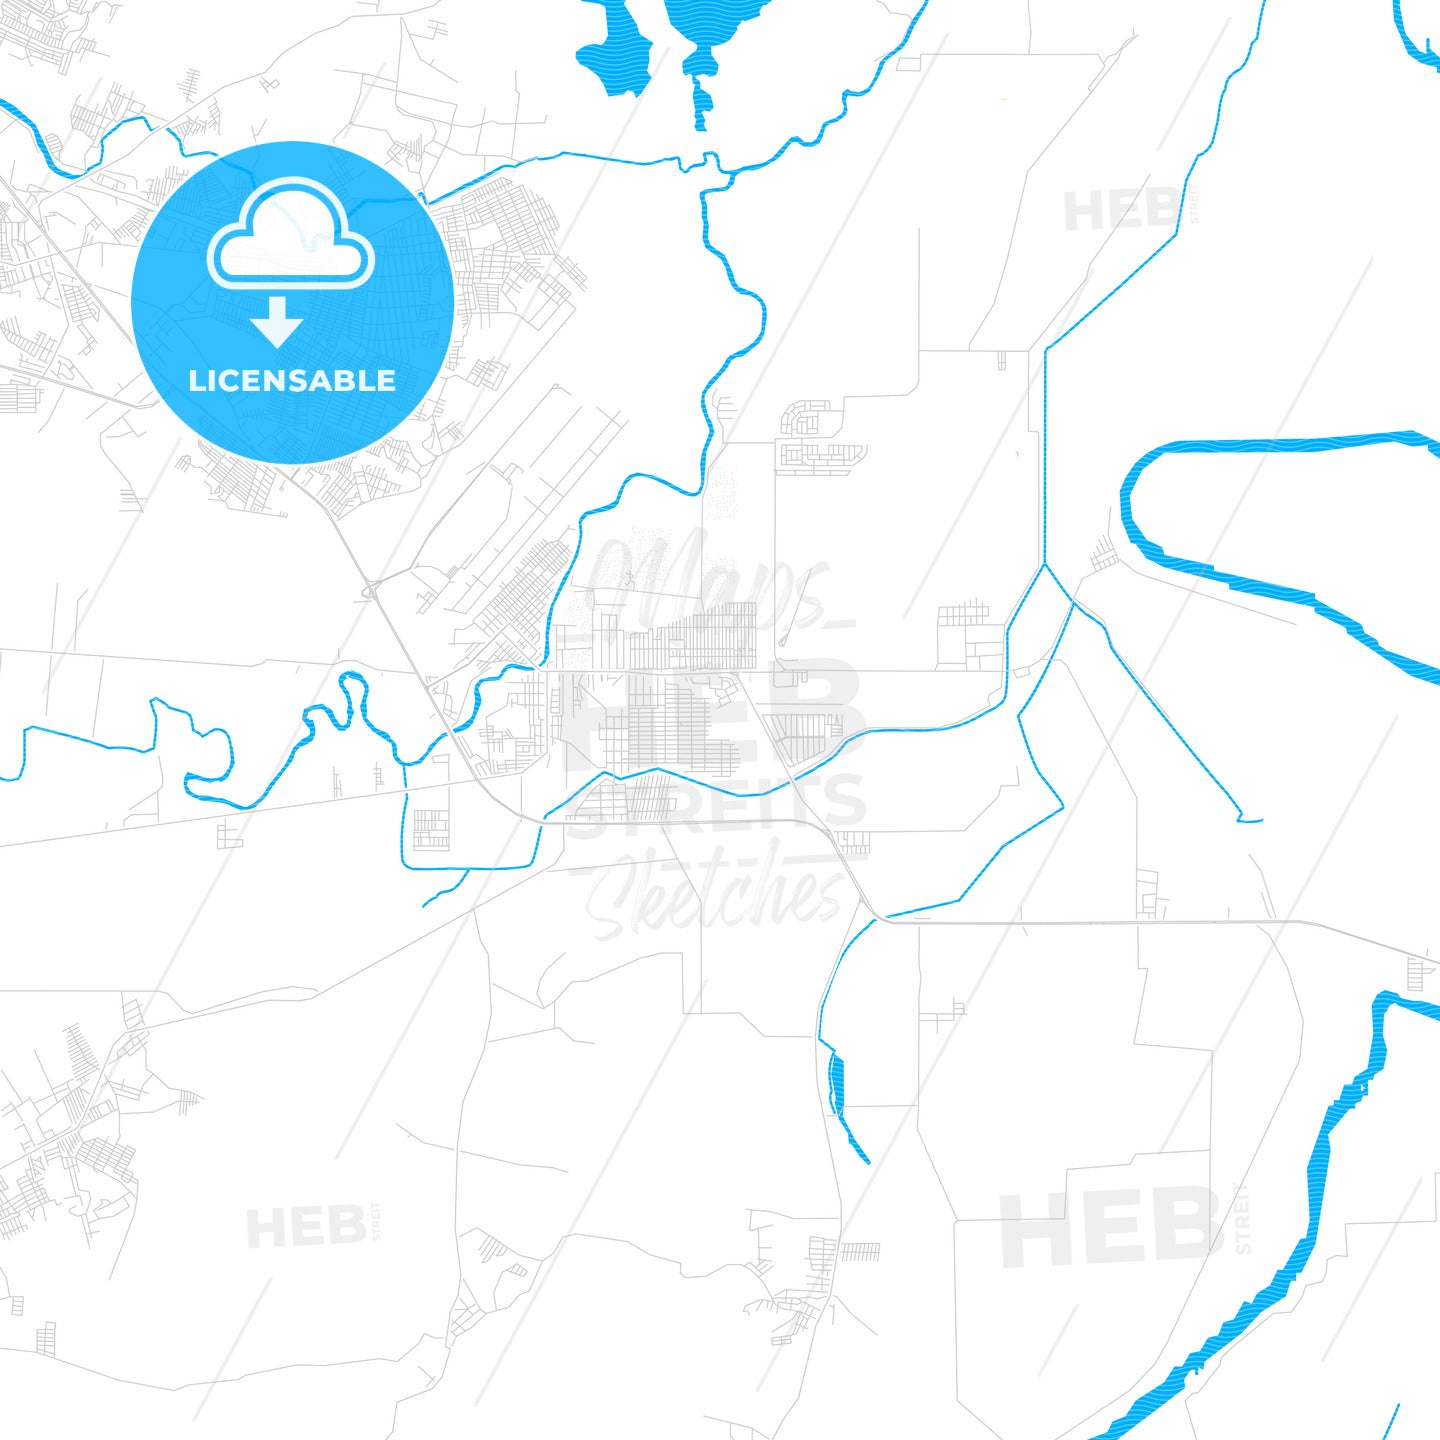 La Lima, Honduras PDF vector map with water in focus